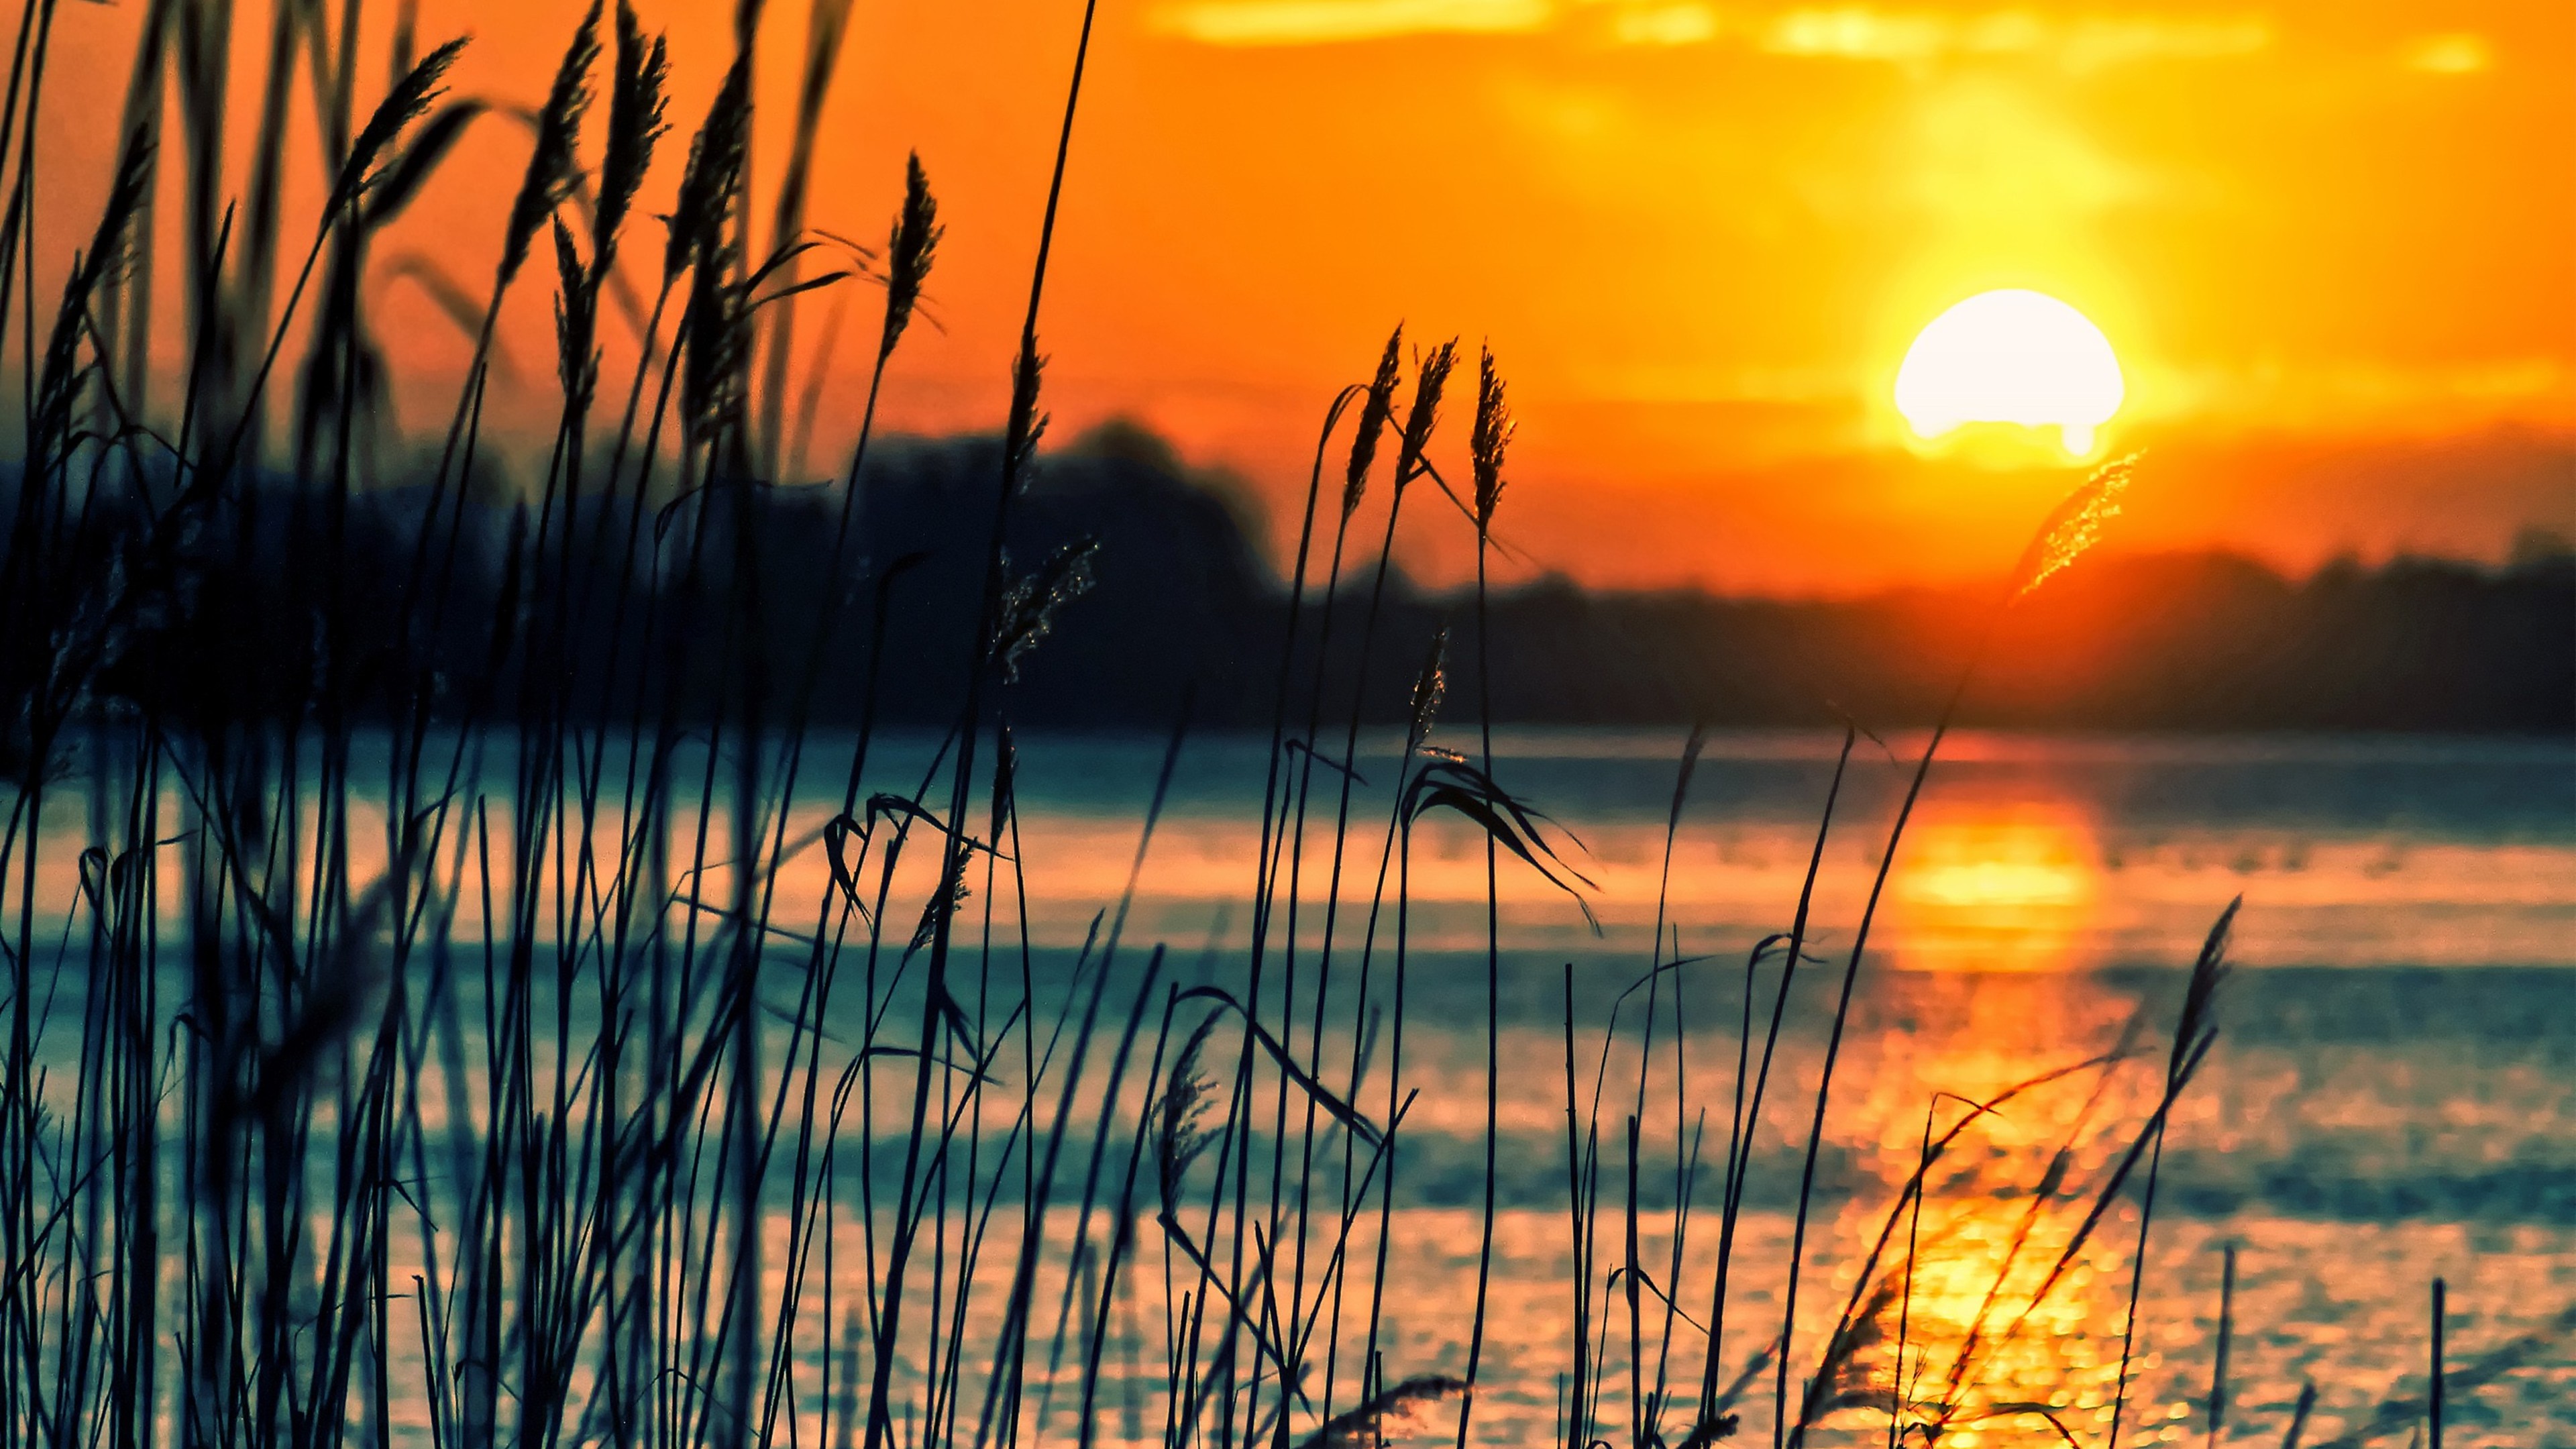 Crops Sunset Lake, HD Nature, 4k Wallpaper, Image